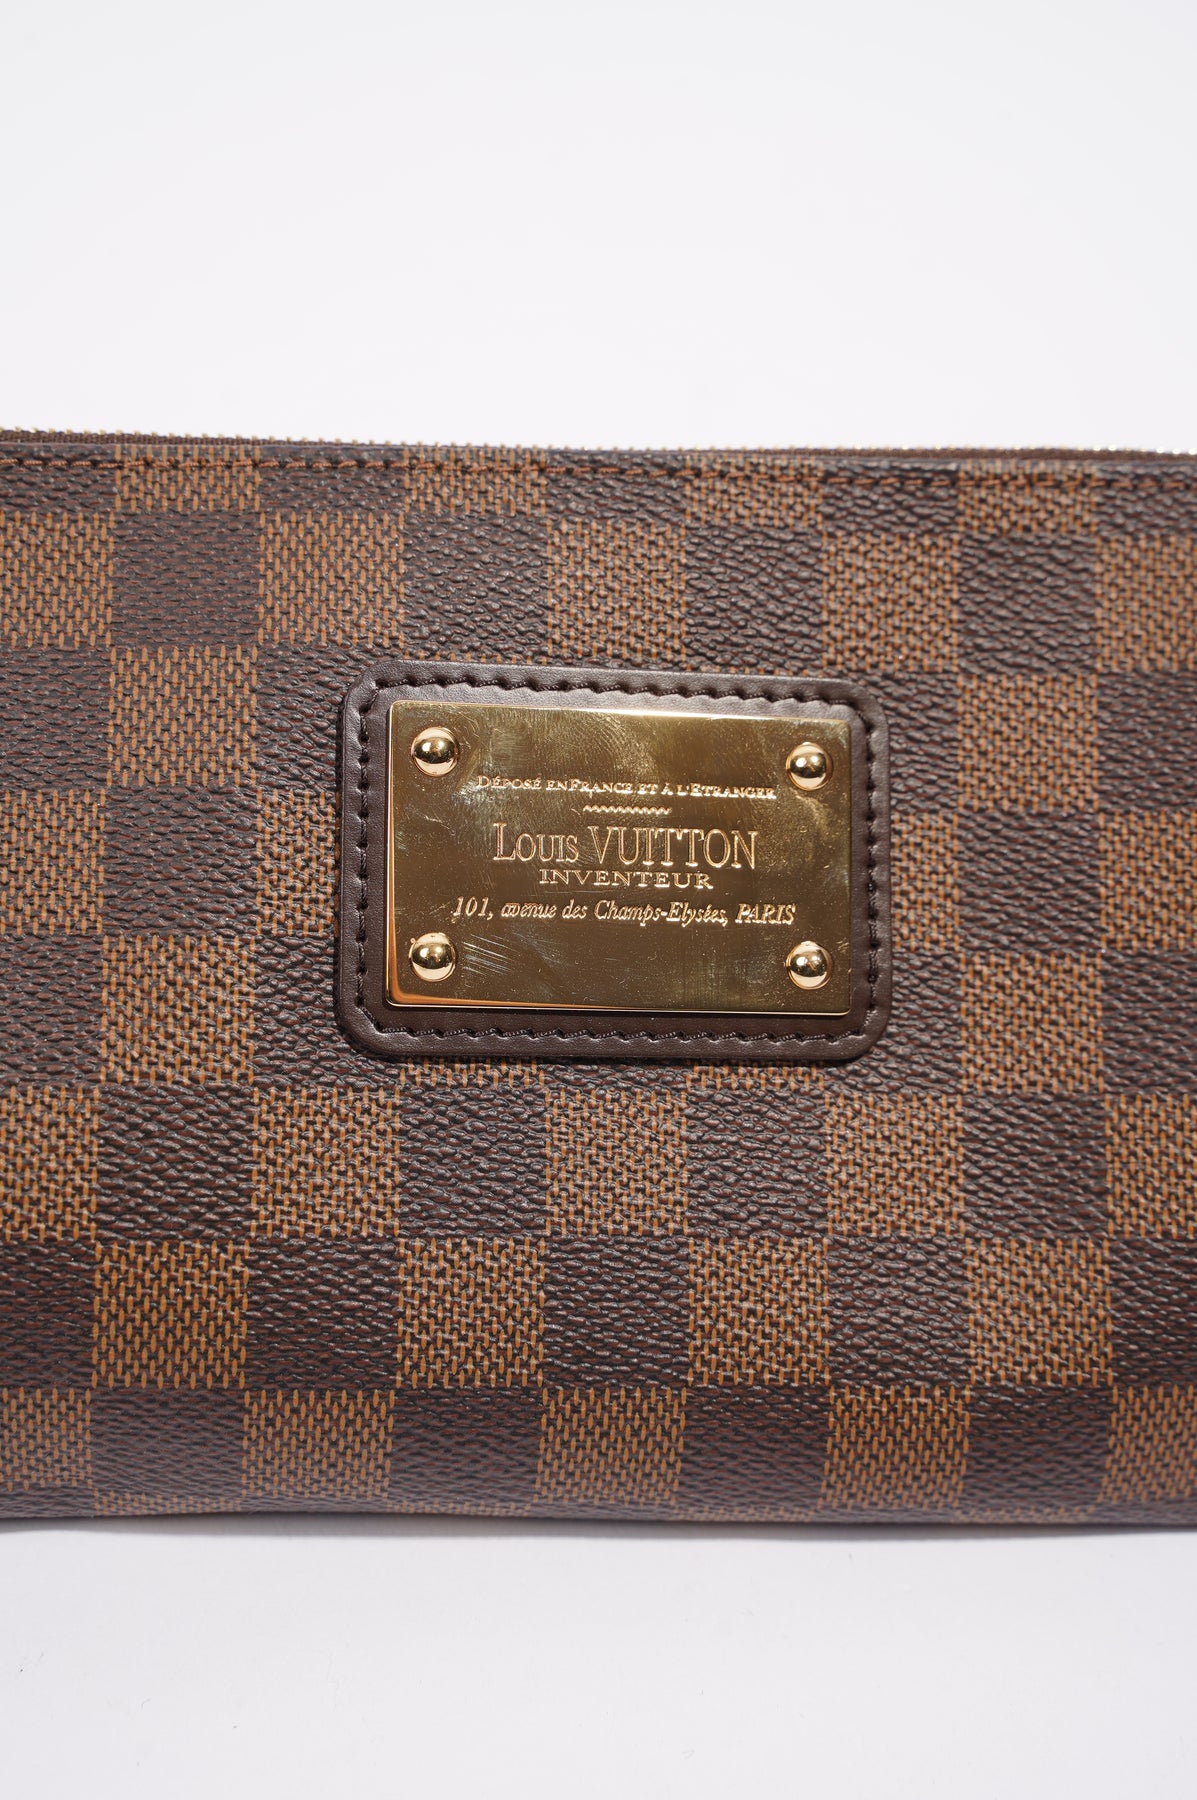 New purchase: Louis Vuitton Damier ebene eva clutch!! 